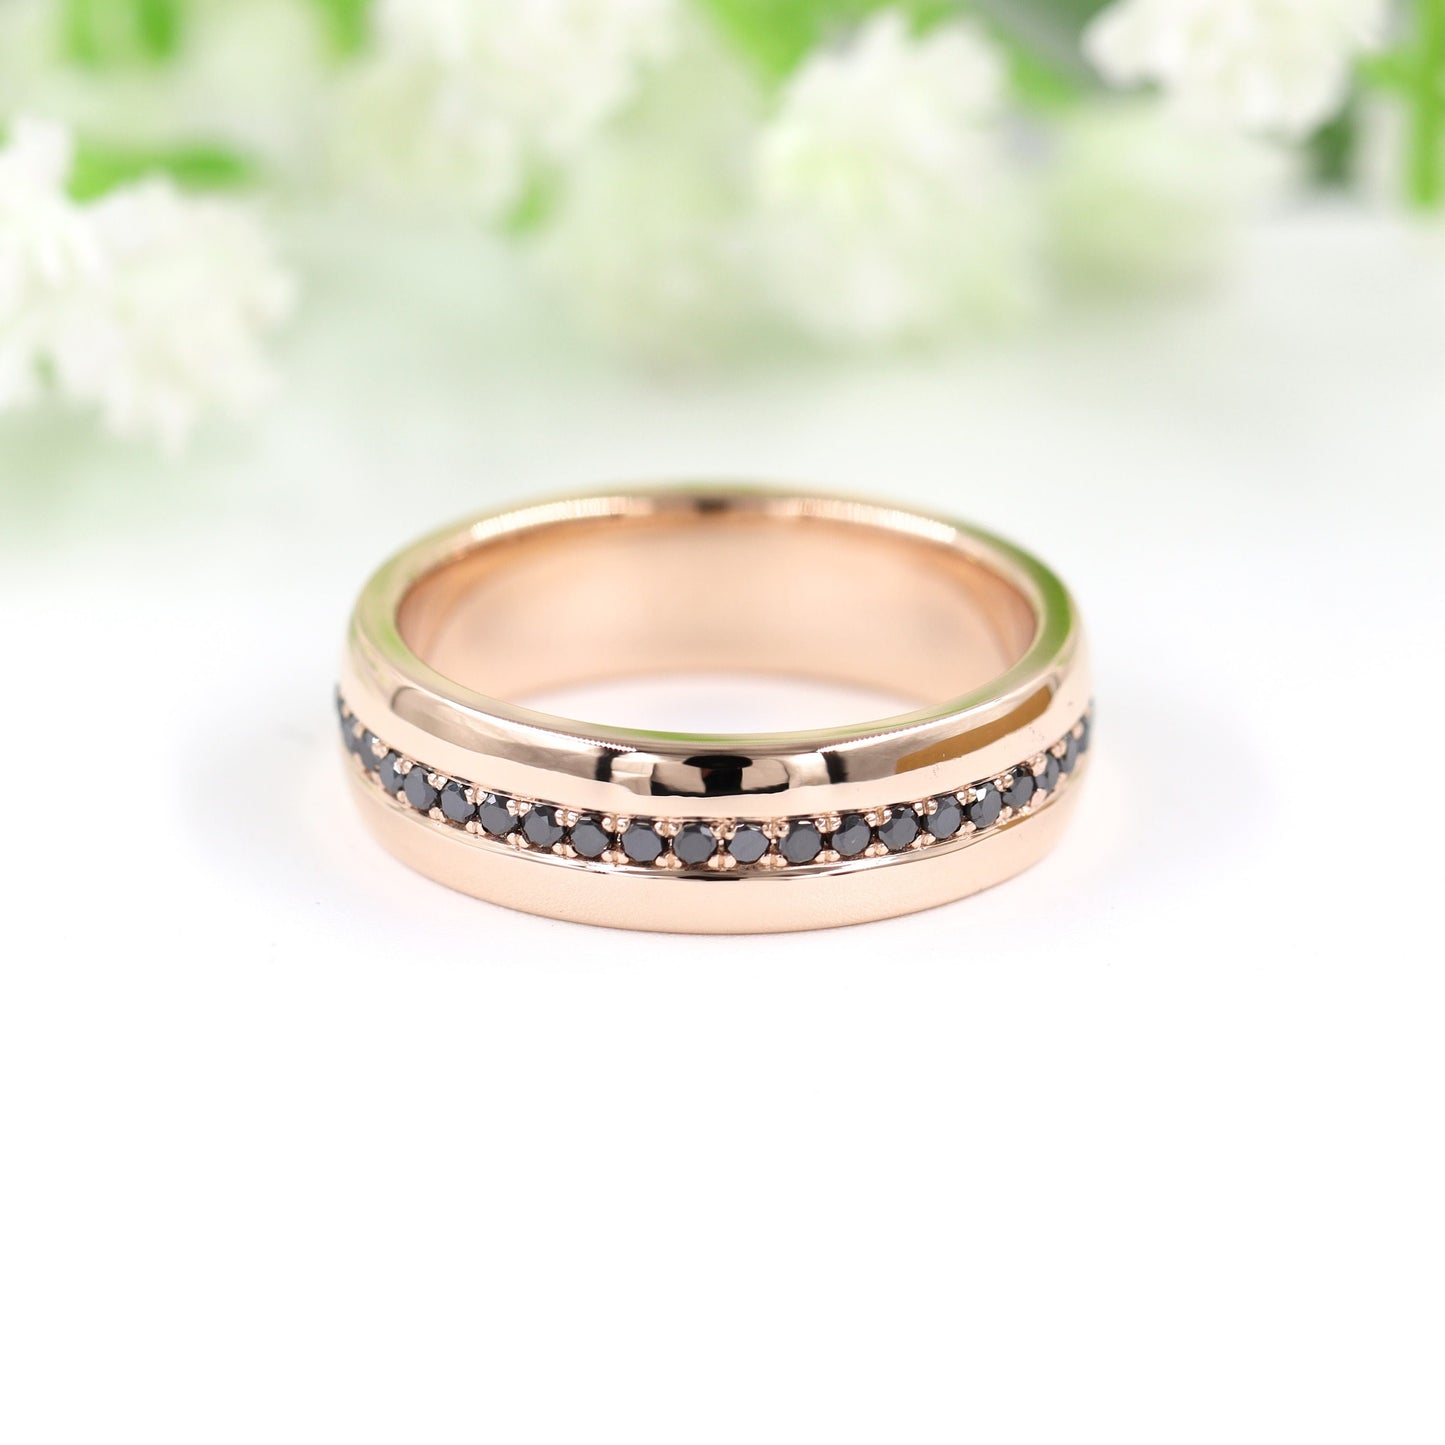 Black Diamond  Wedding Band/ Black  Diamond Engagement Ring / Black Domed Wedding Ring - 6mm